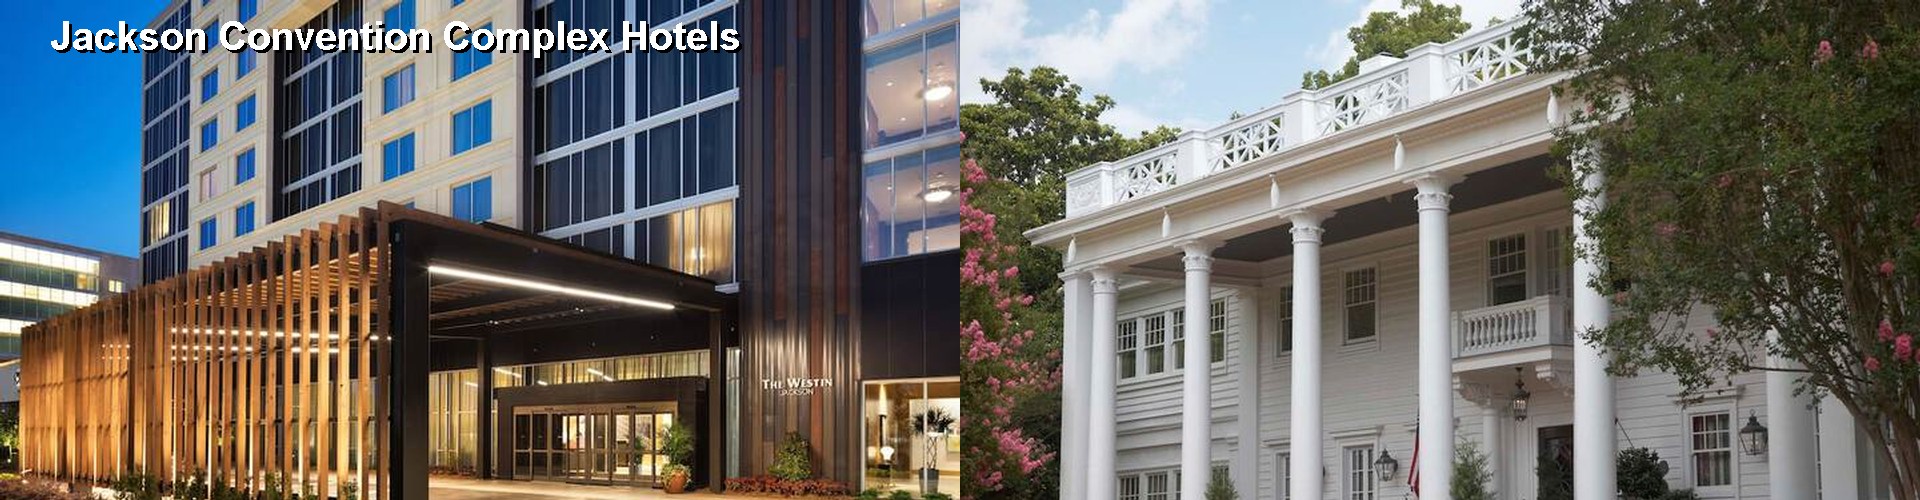 2 Best Hotels near Jackson Convention Complex